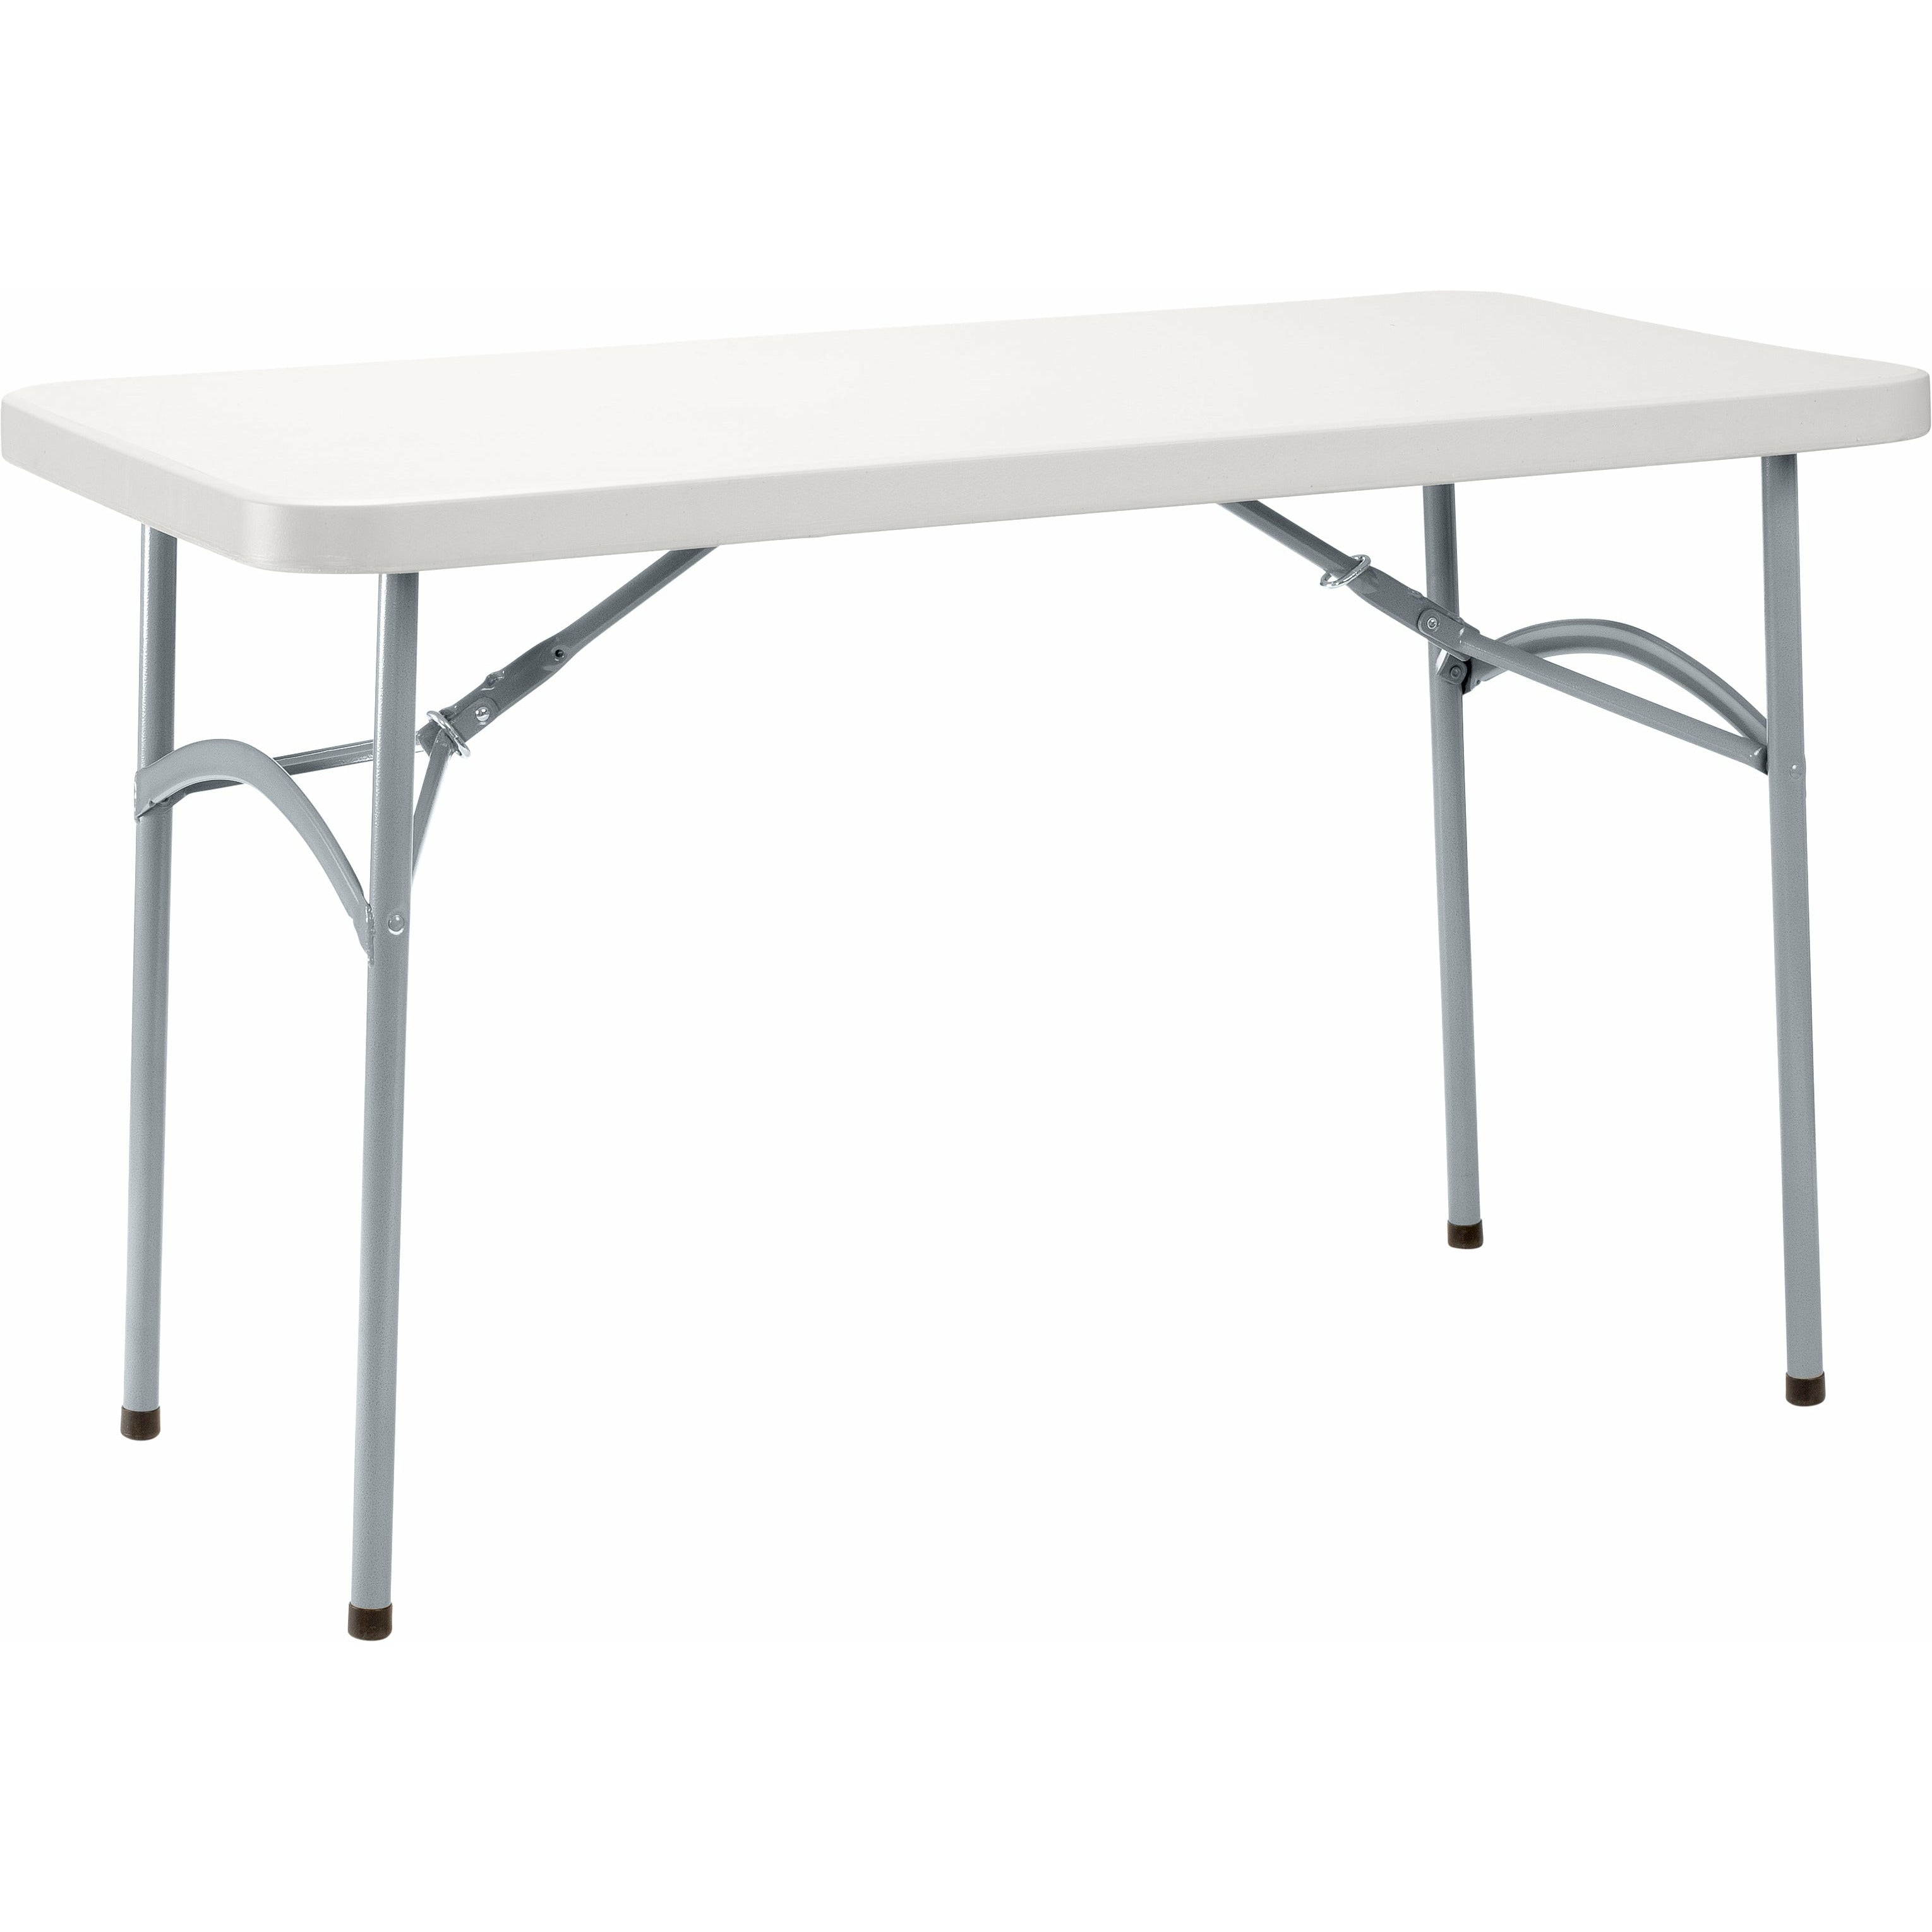 24 x 48 Heavy Duty Folding Table, Speckled Grey